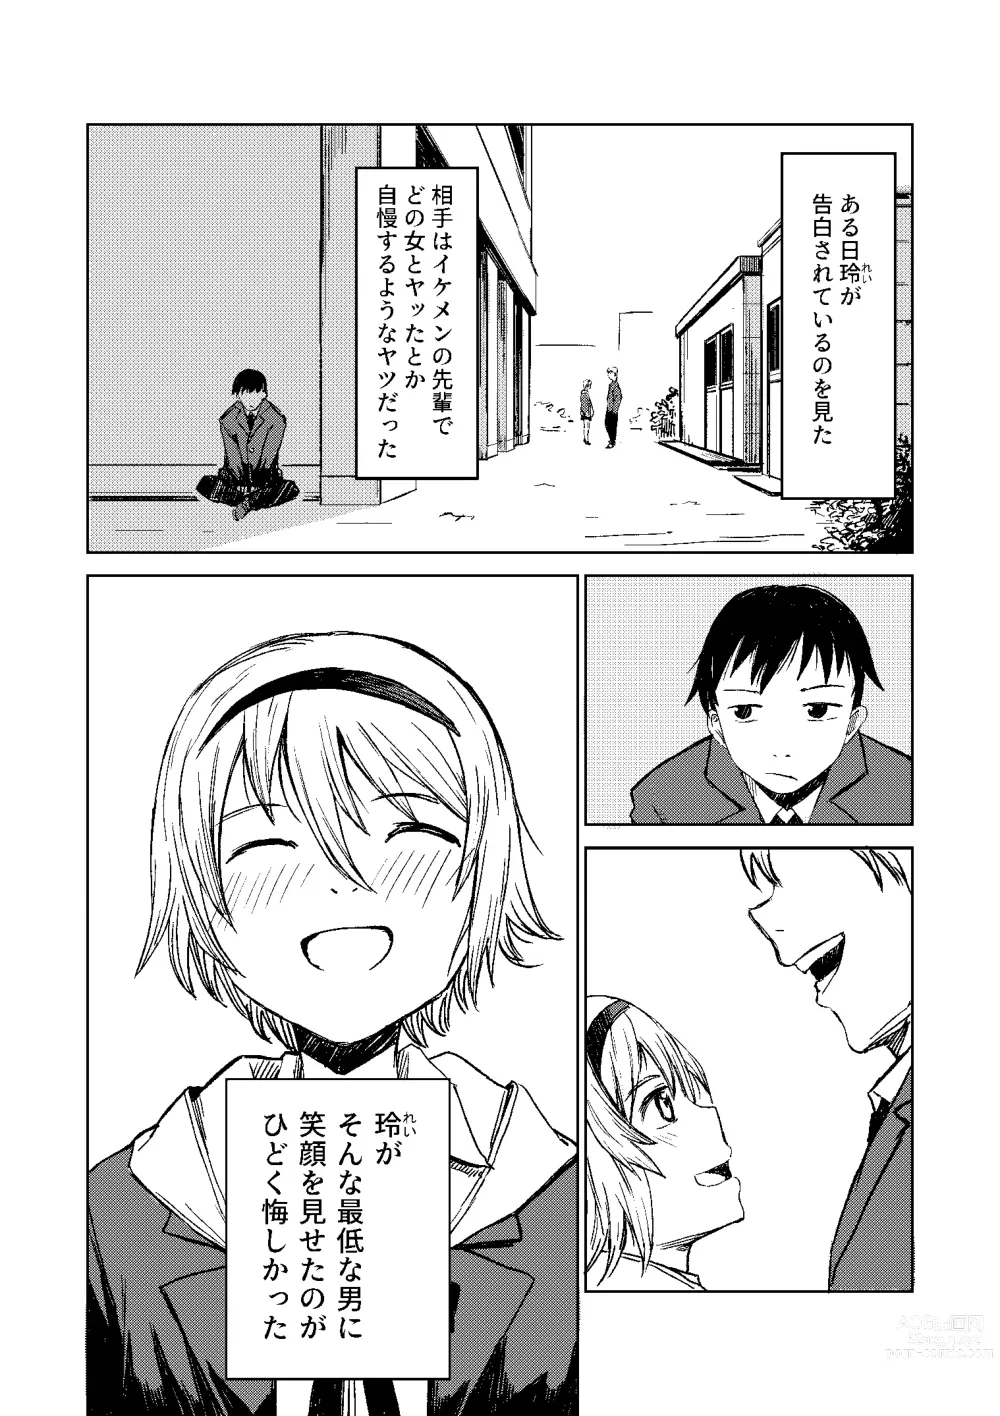 Page 3 of doujinshi FRIEND